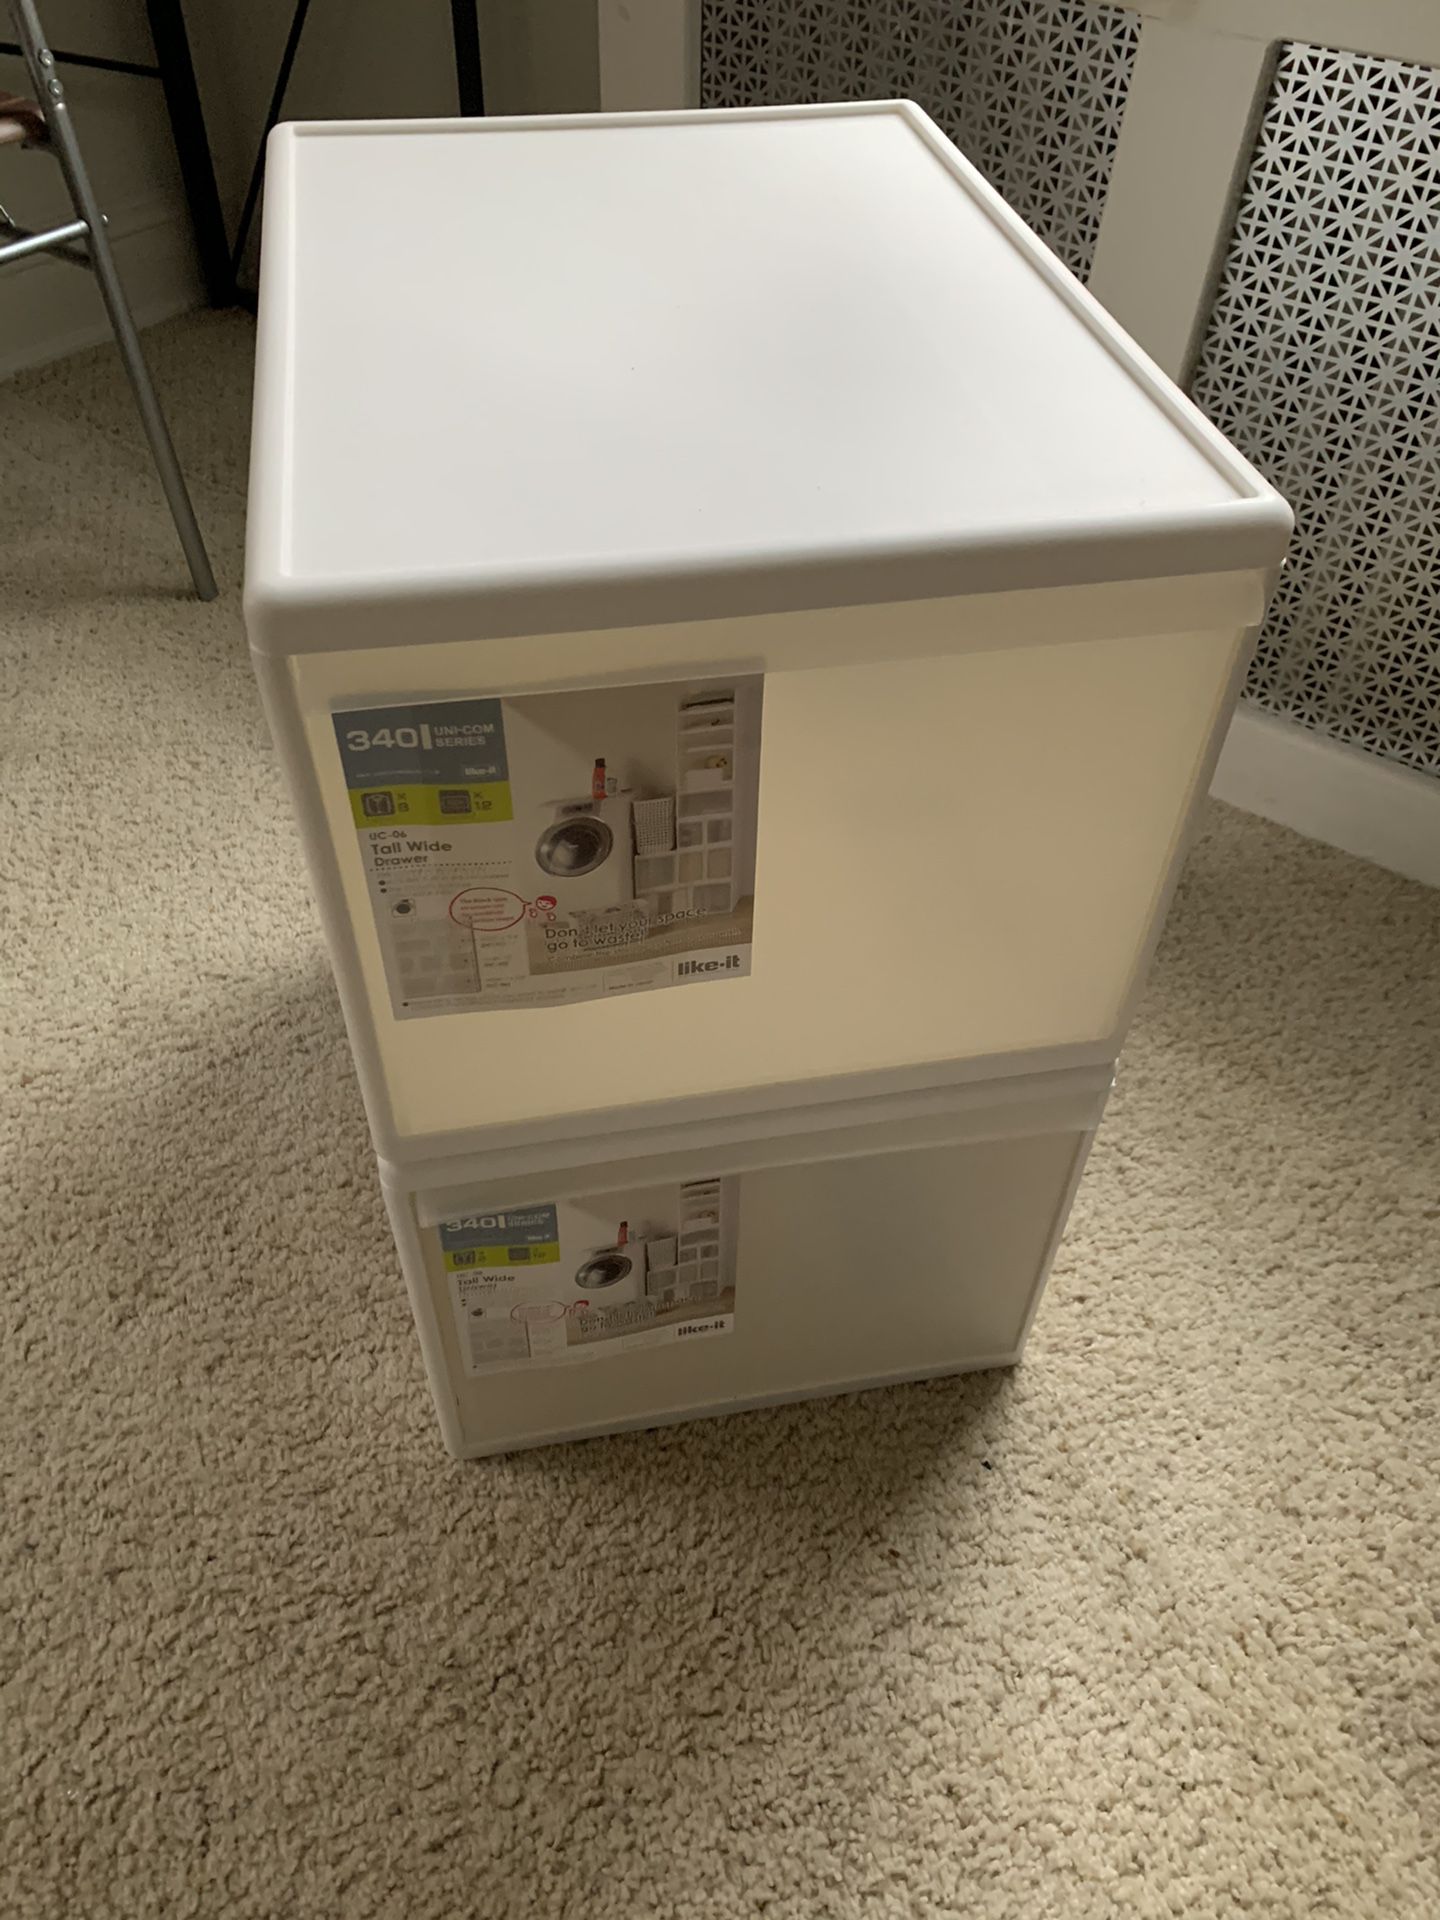 Like-it drawer storage bins